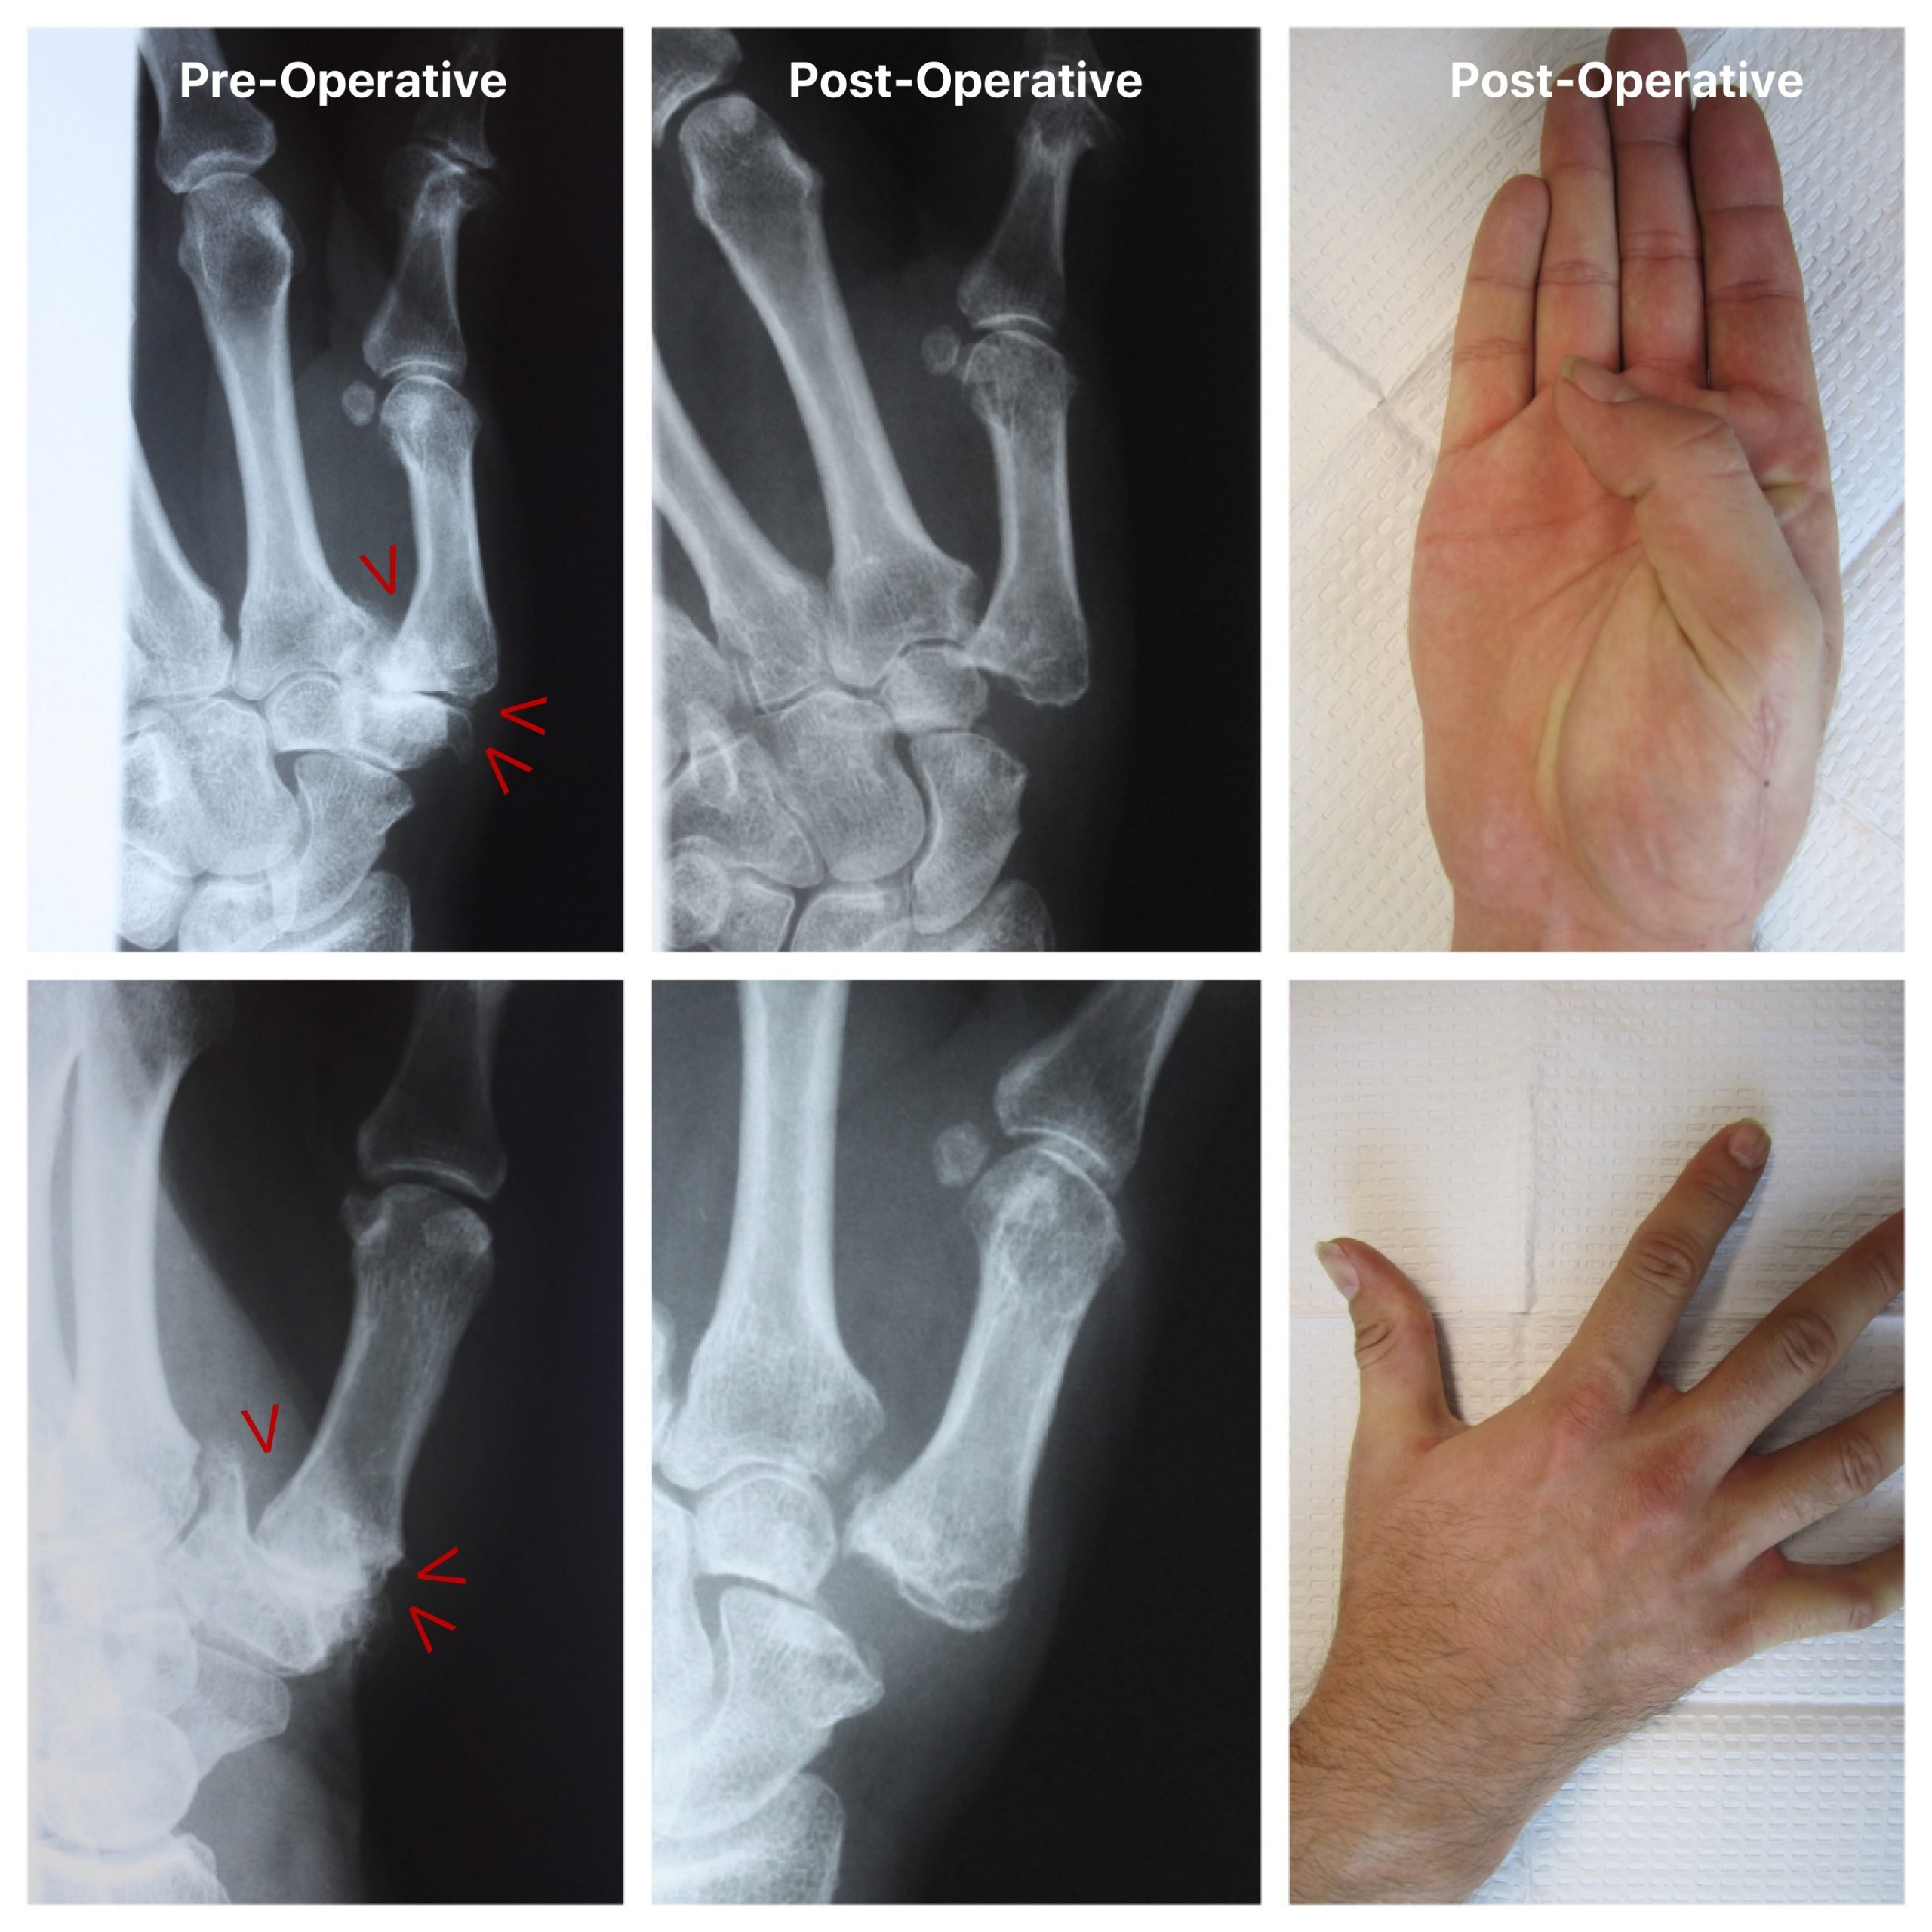 Thumb Arthritis Treatment in Raleigh by Dr. Erickson